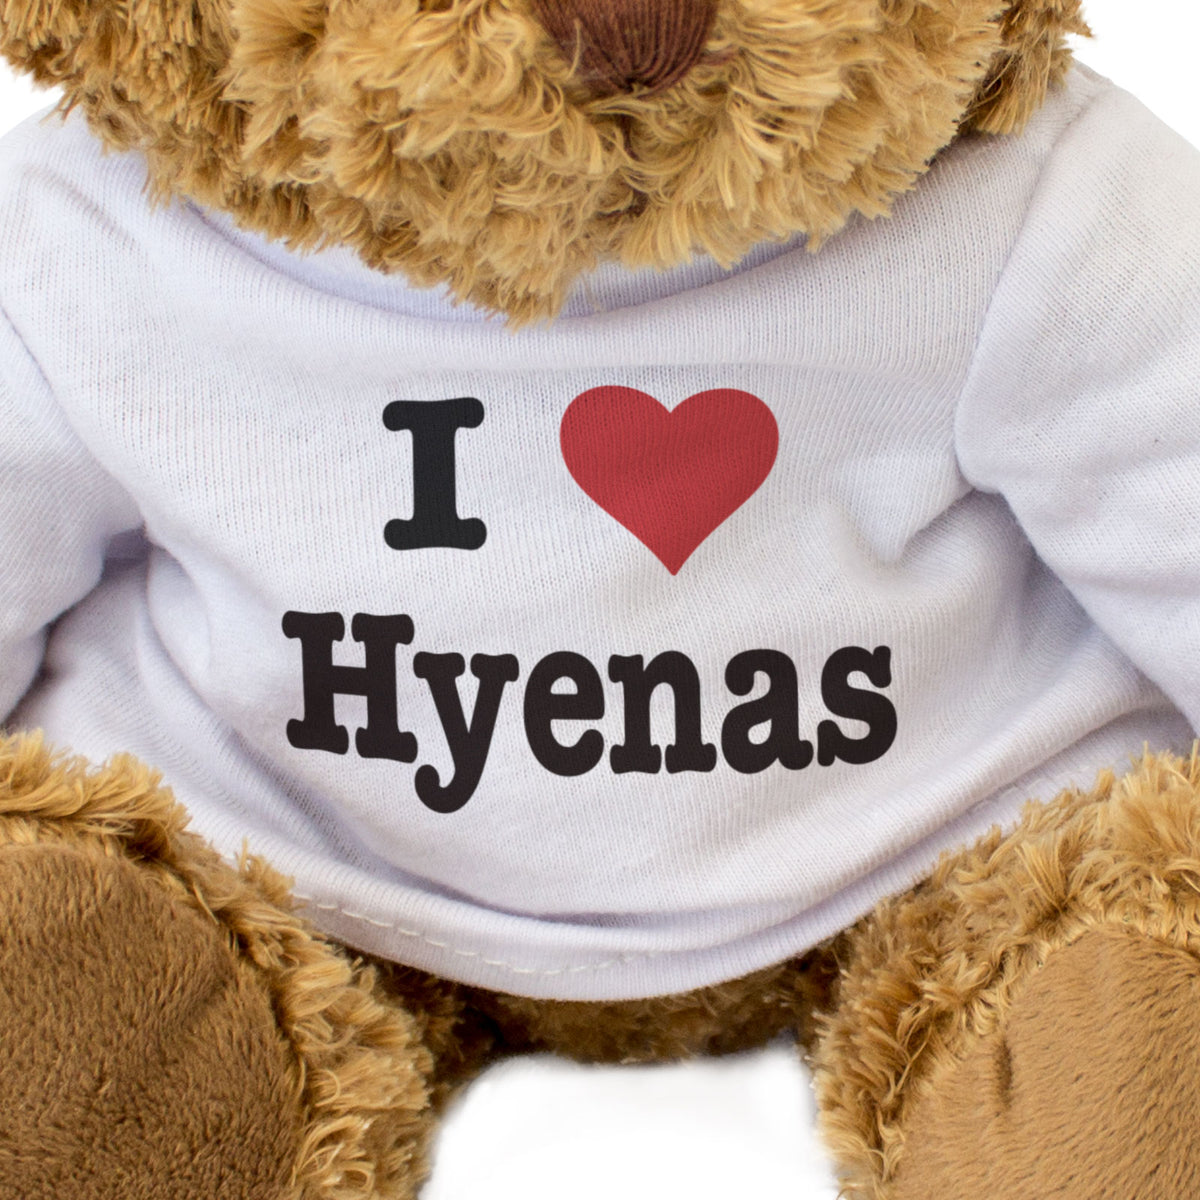 I Love Hyenas - Teddy Bear